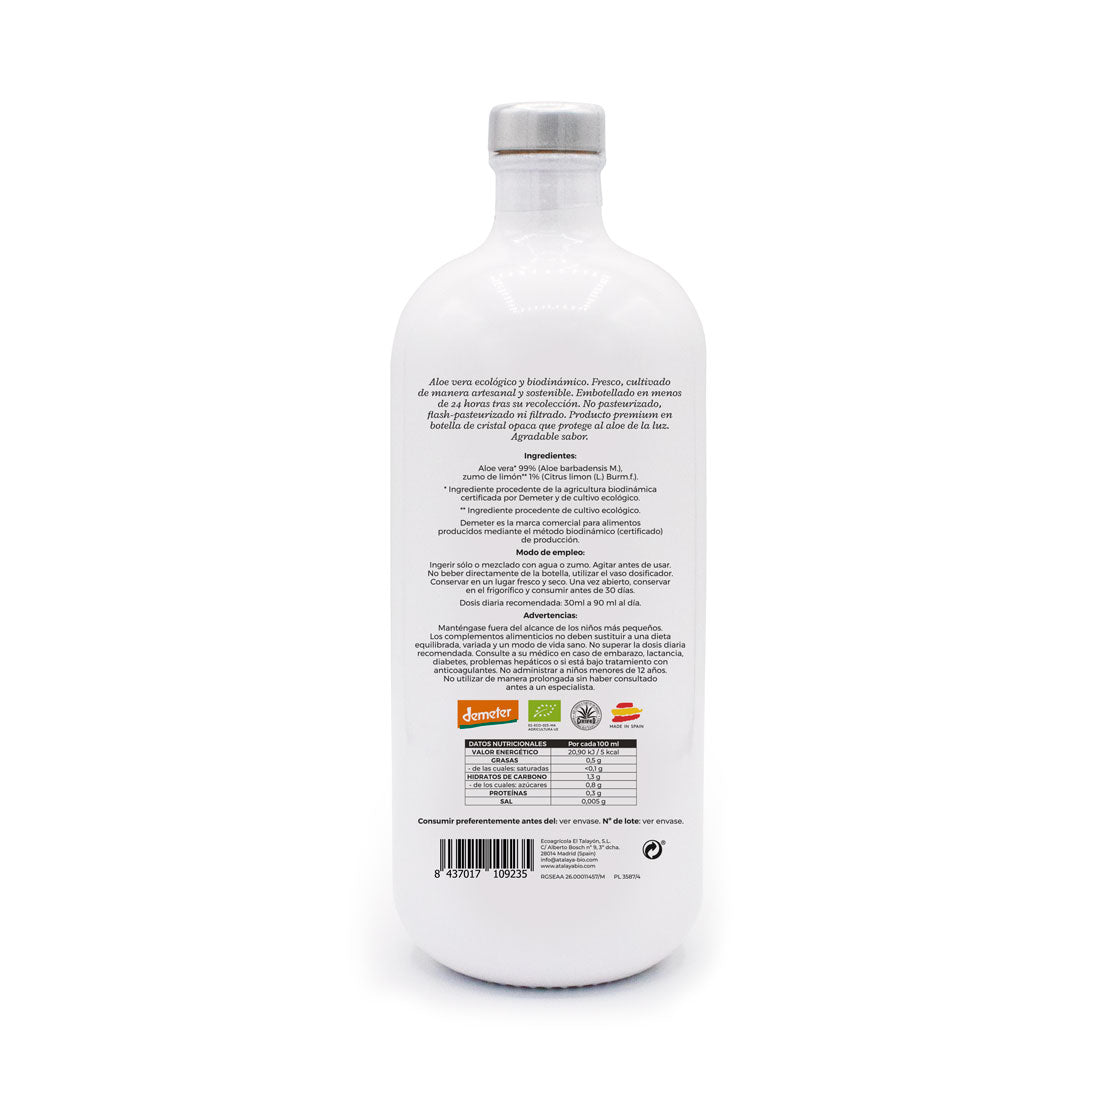 Biodynamic Pure Aloe Vera Juice 100% Natural Aloin-Free